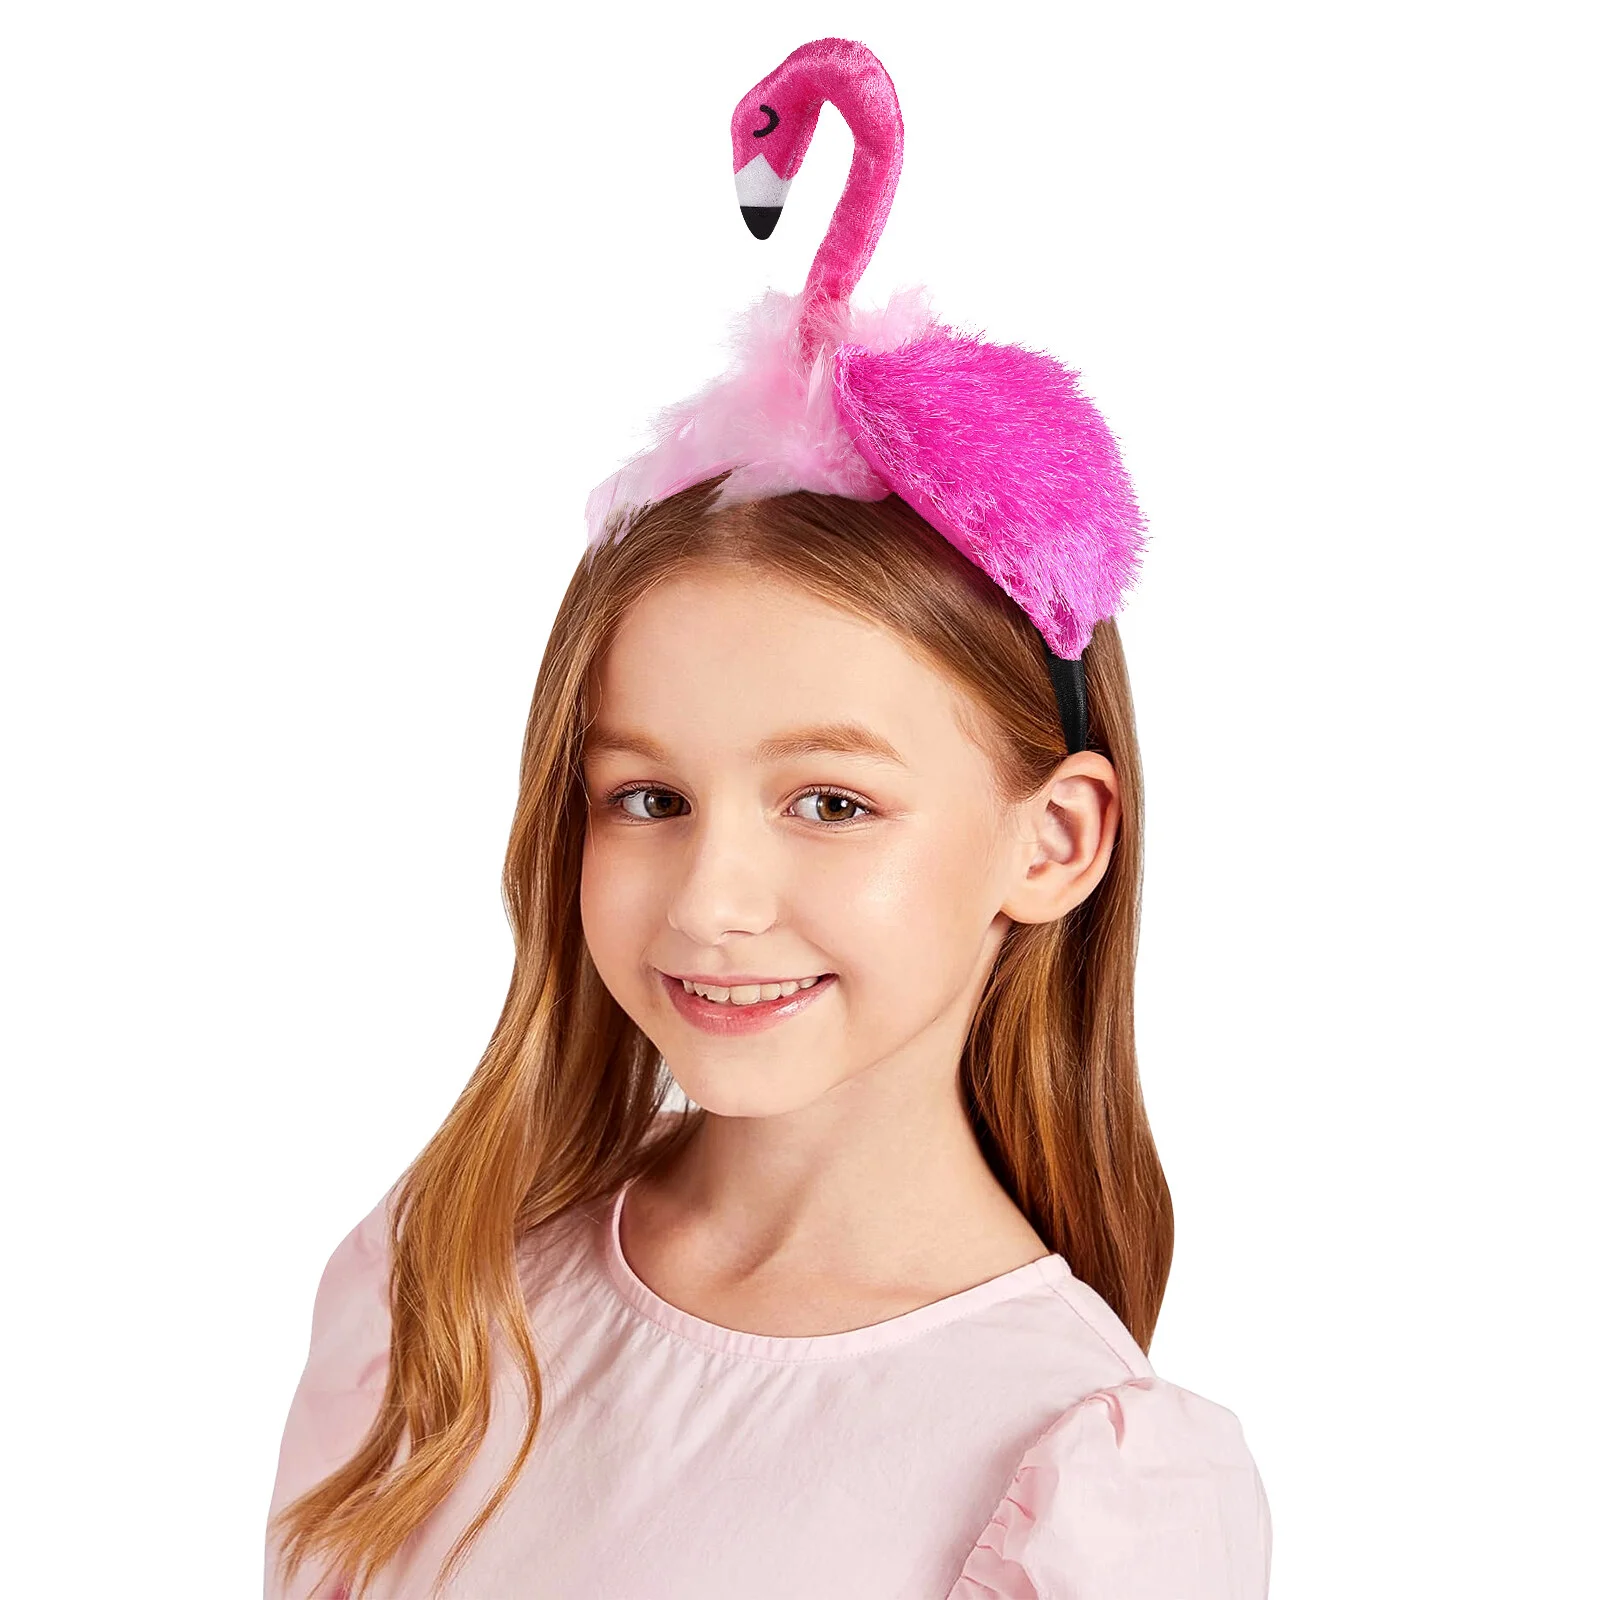 

Flamingo Headband Festival Accessories Girls Dresses Photography Props Children's Place Girls Clothes Decor